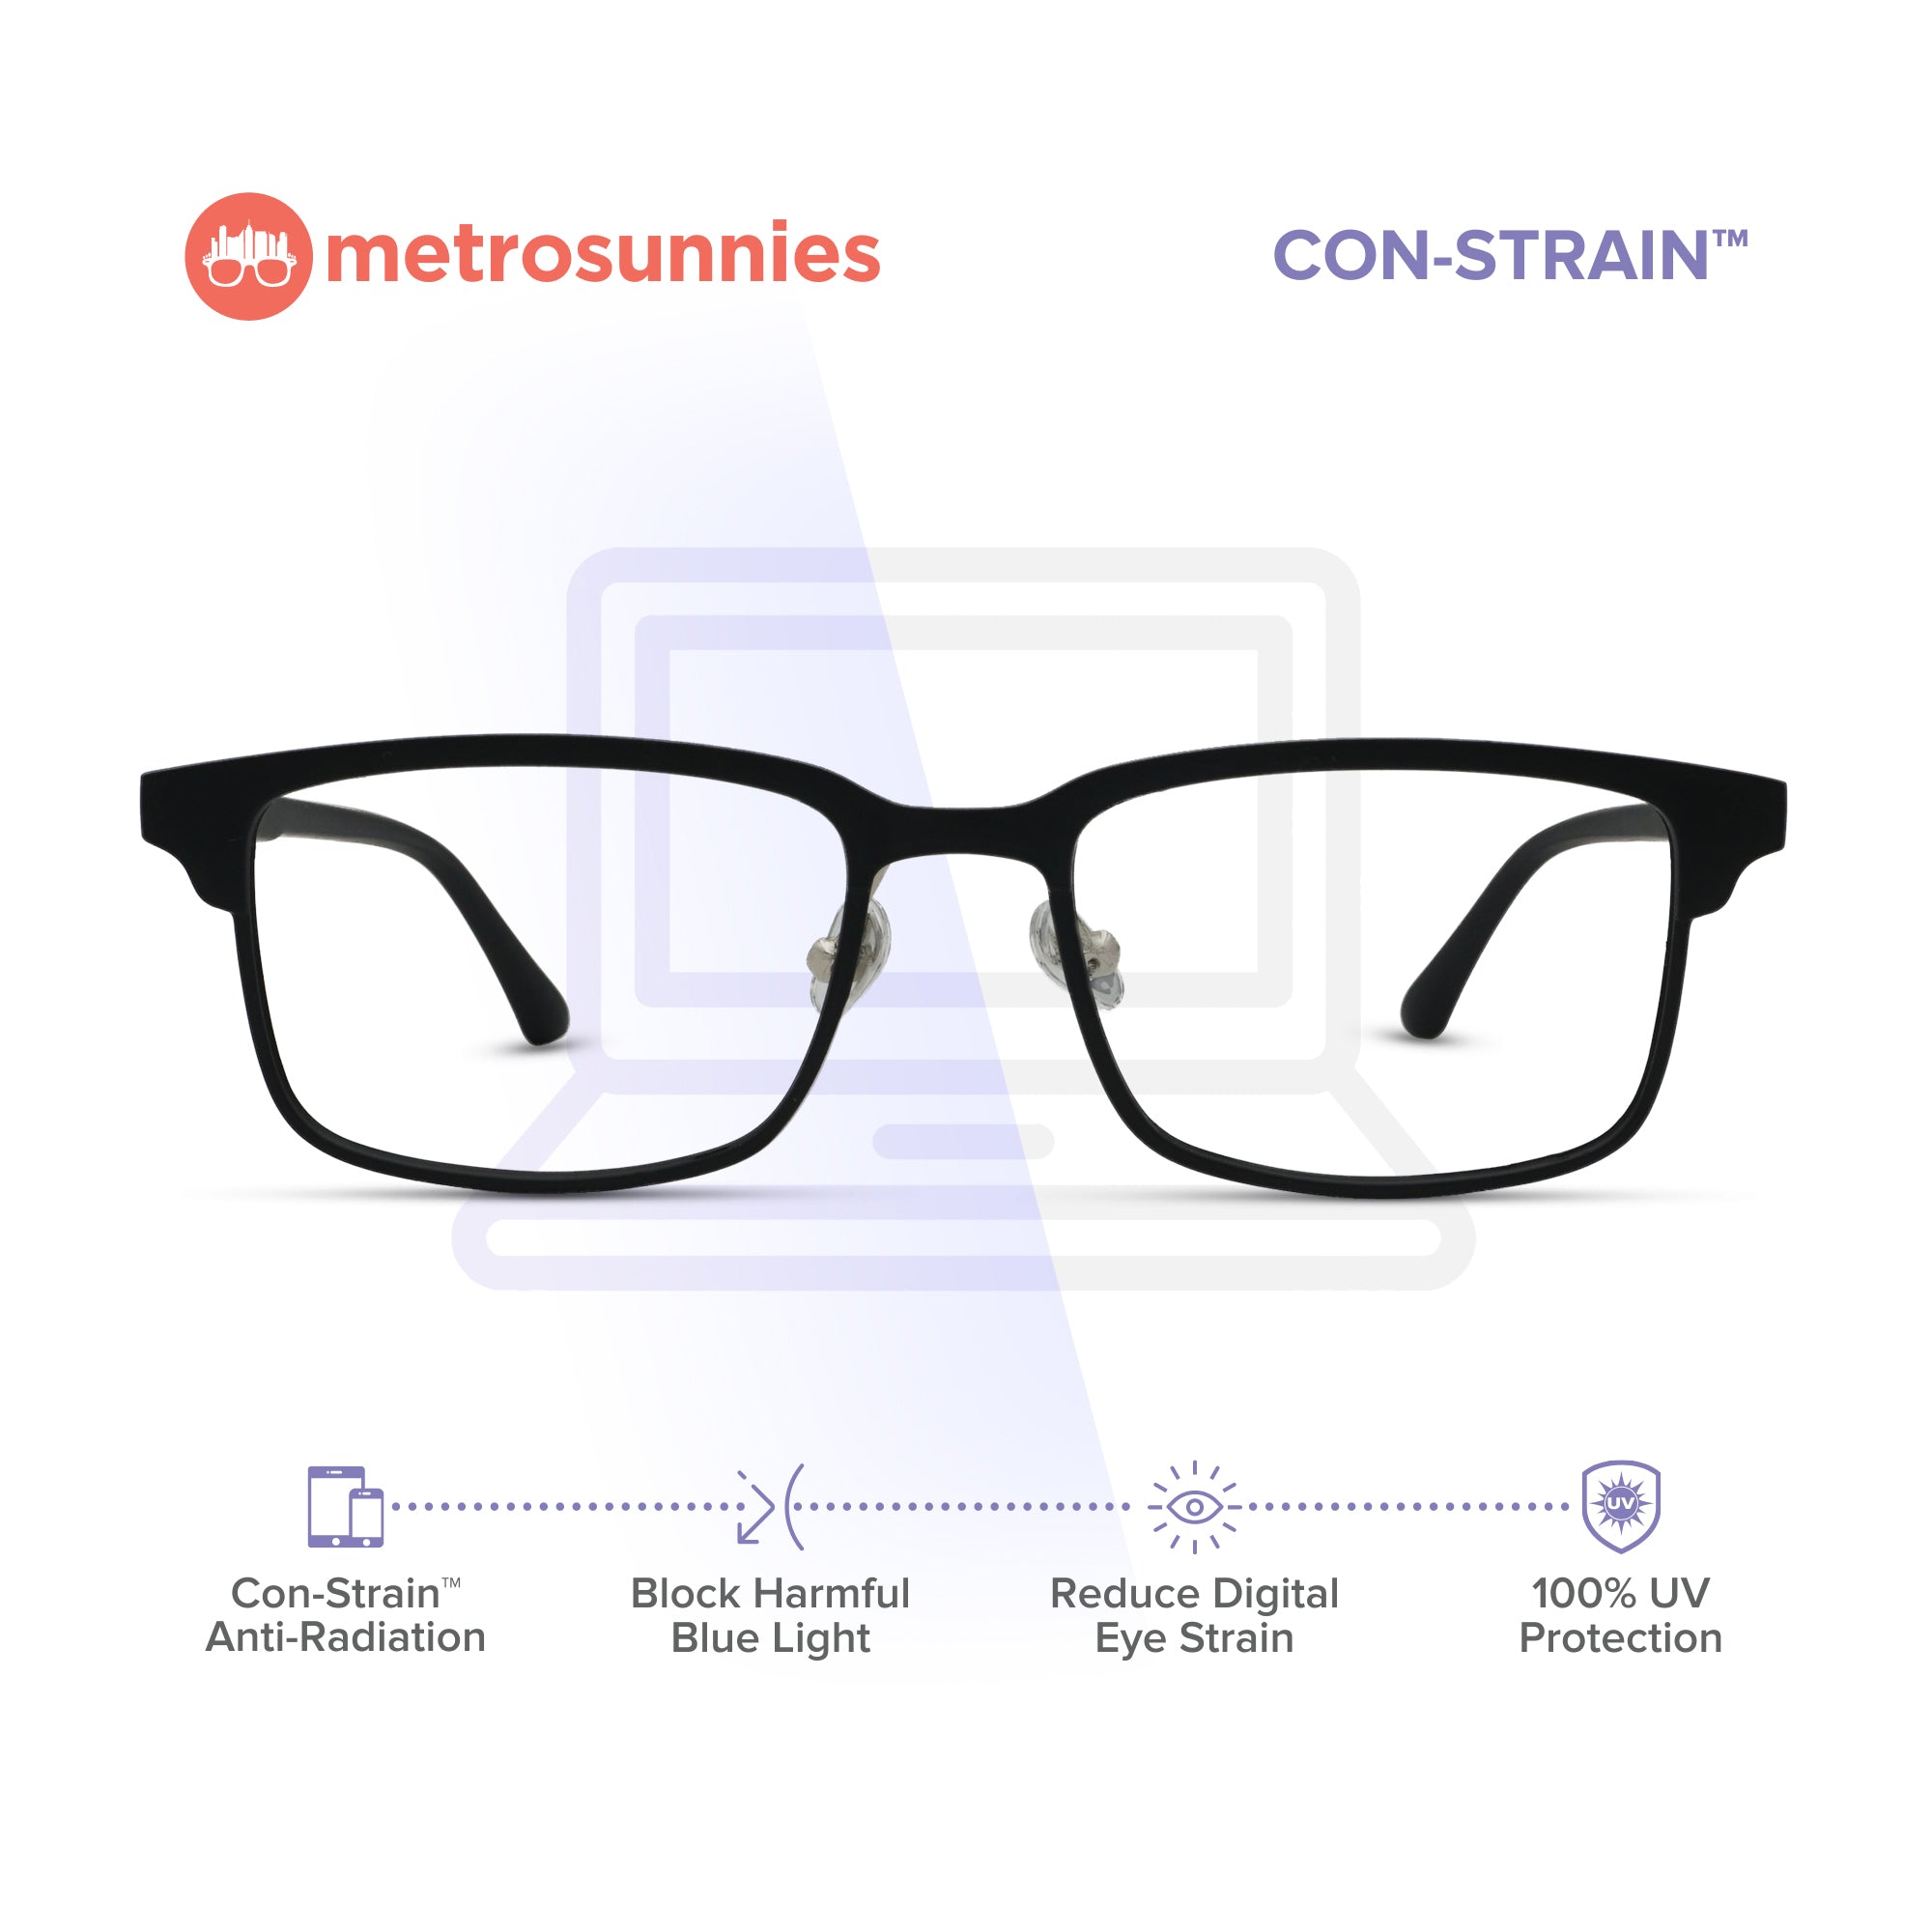 MetroSunnies Emperor Specs (Black) / Con-Strain Blue Light / Versairy / Anti-Radiation Eyeglasses